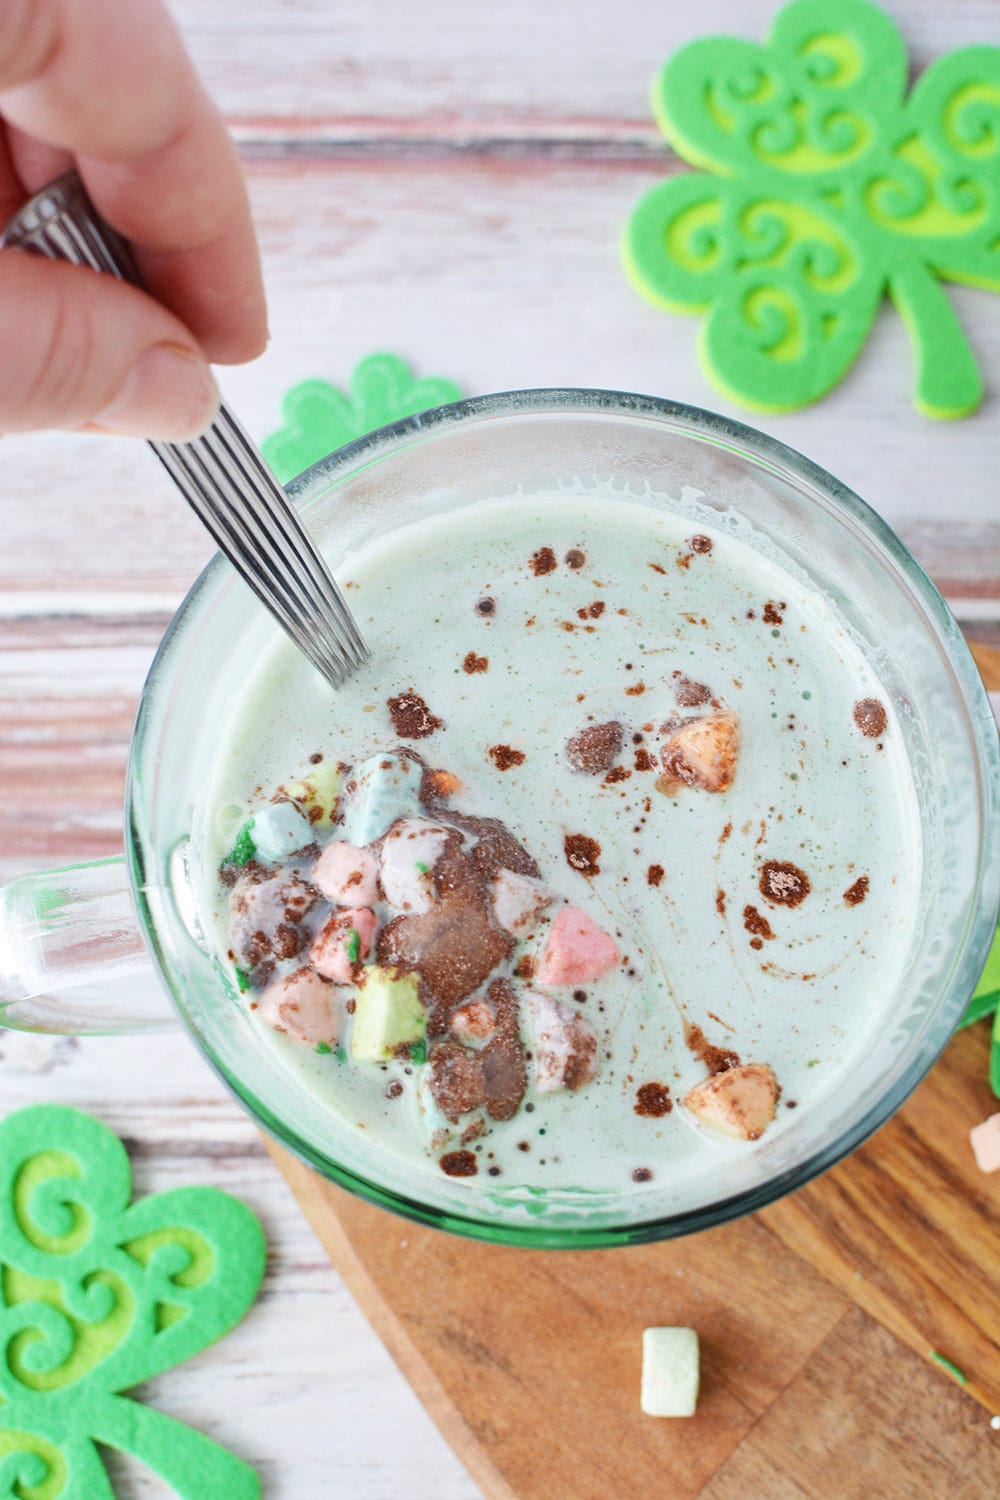 Stirring green hot chocolate with rainbow marshmallows.